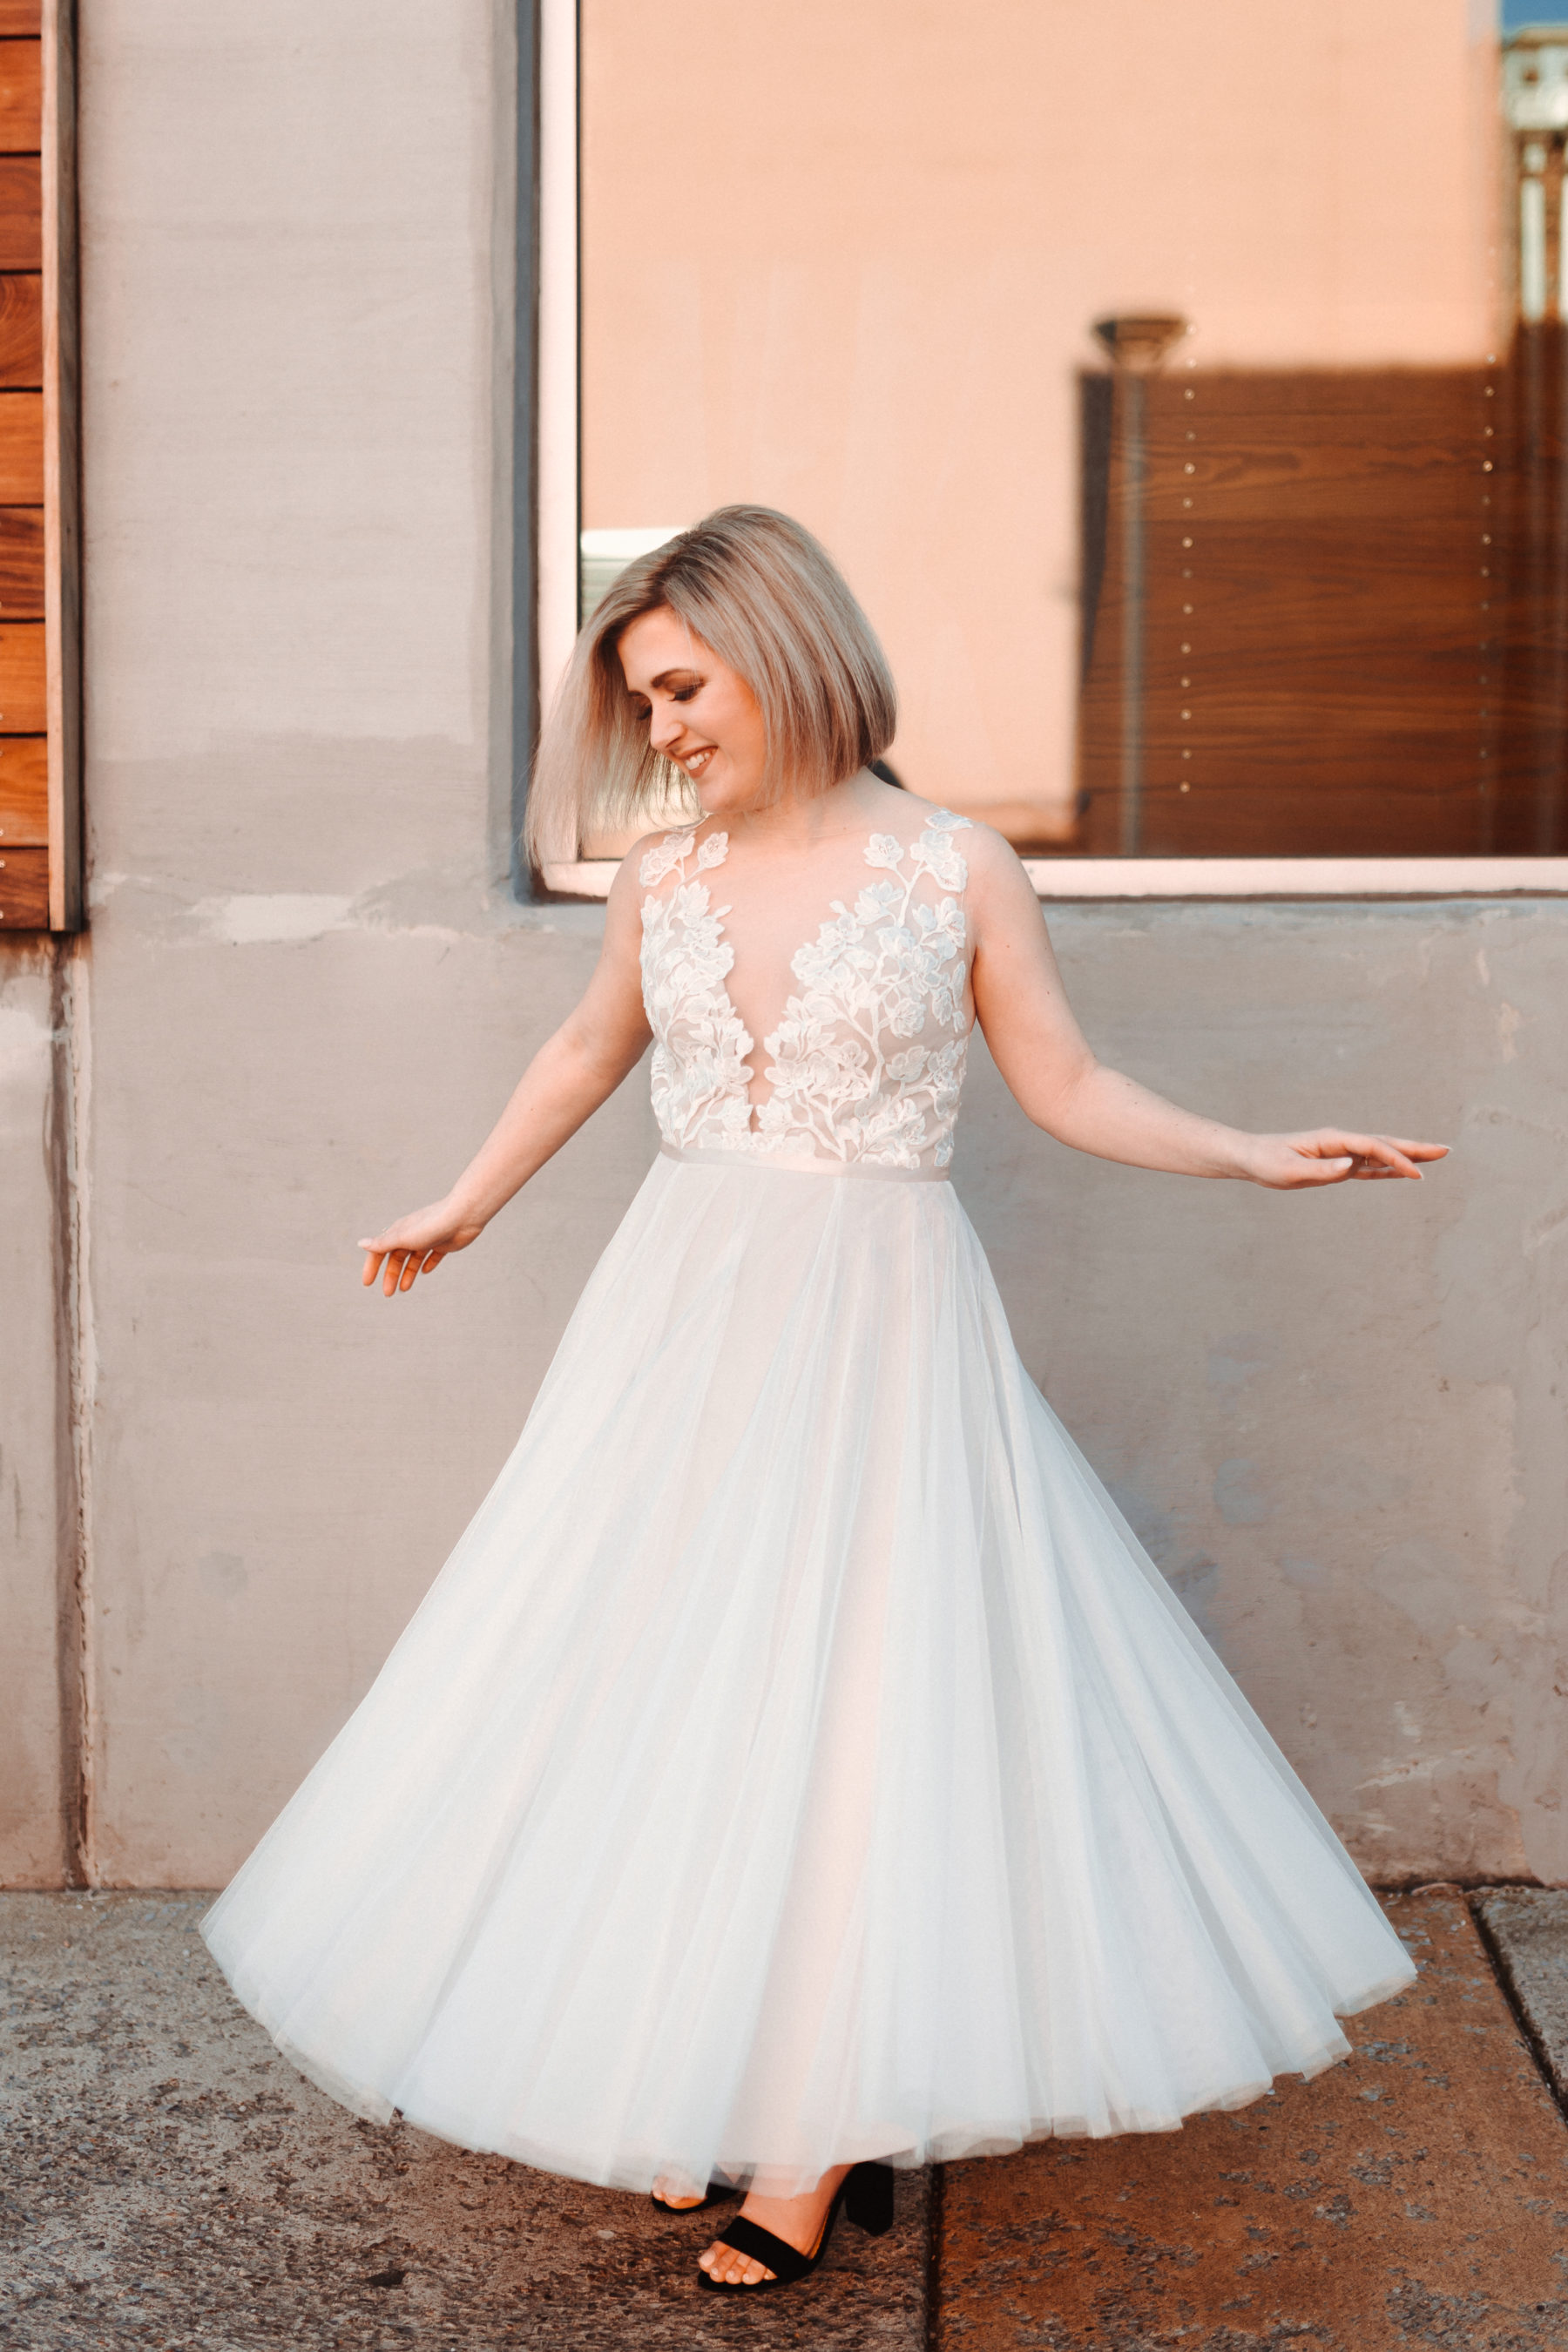 Bridal portrait: Nashville brunch elopement featured on Nashville Bride Guide